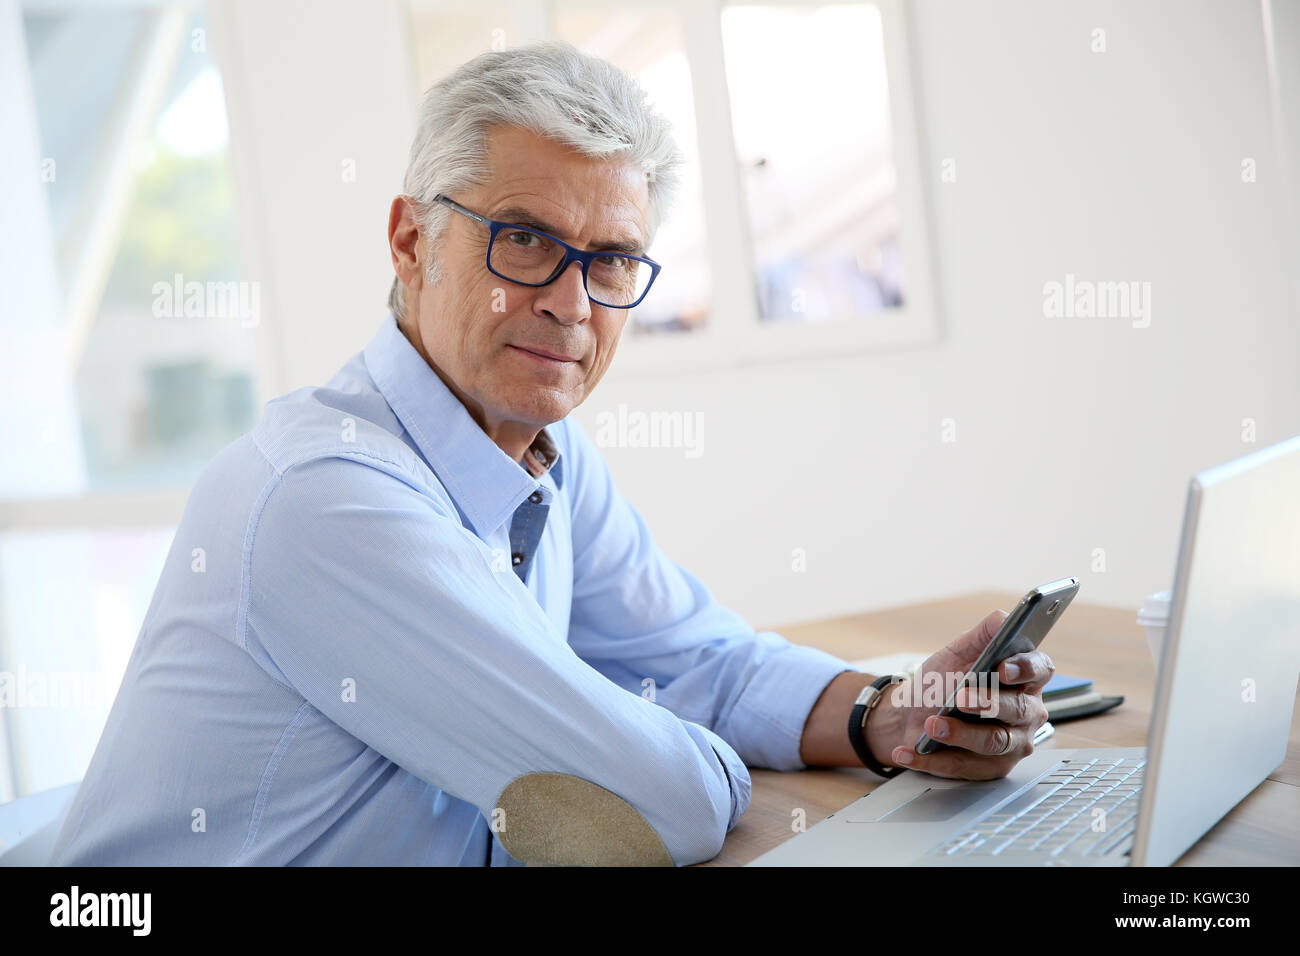 Senior businessman working on laptop computer Banque D'Images